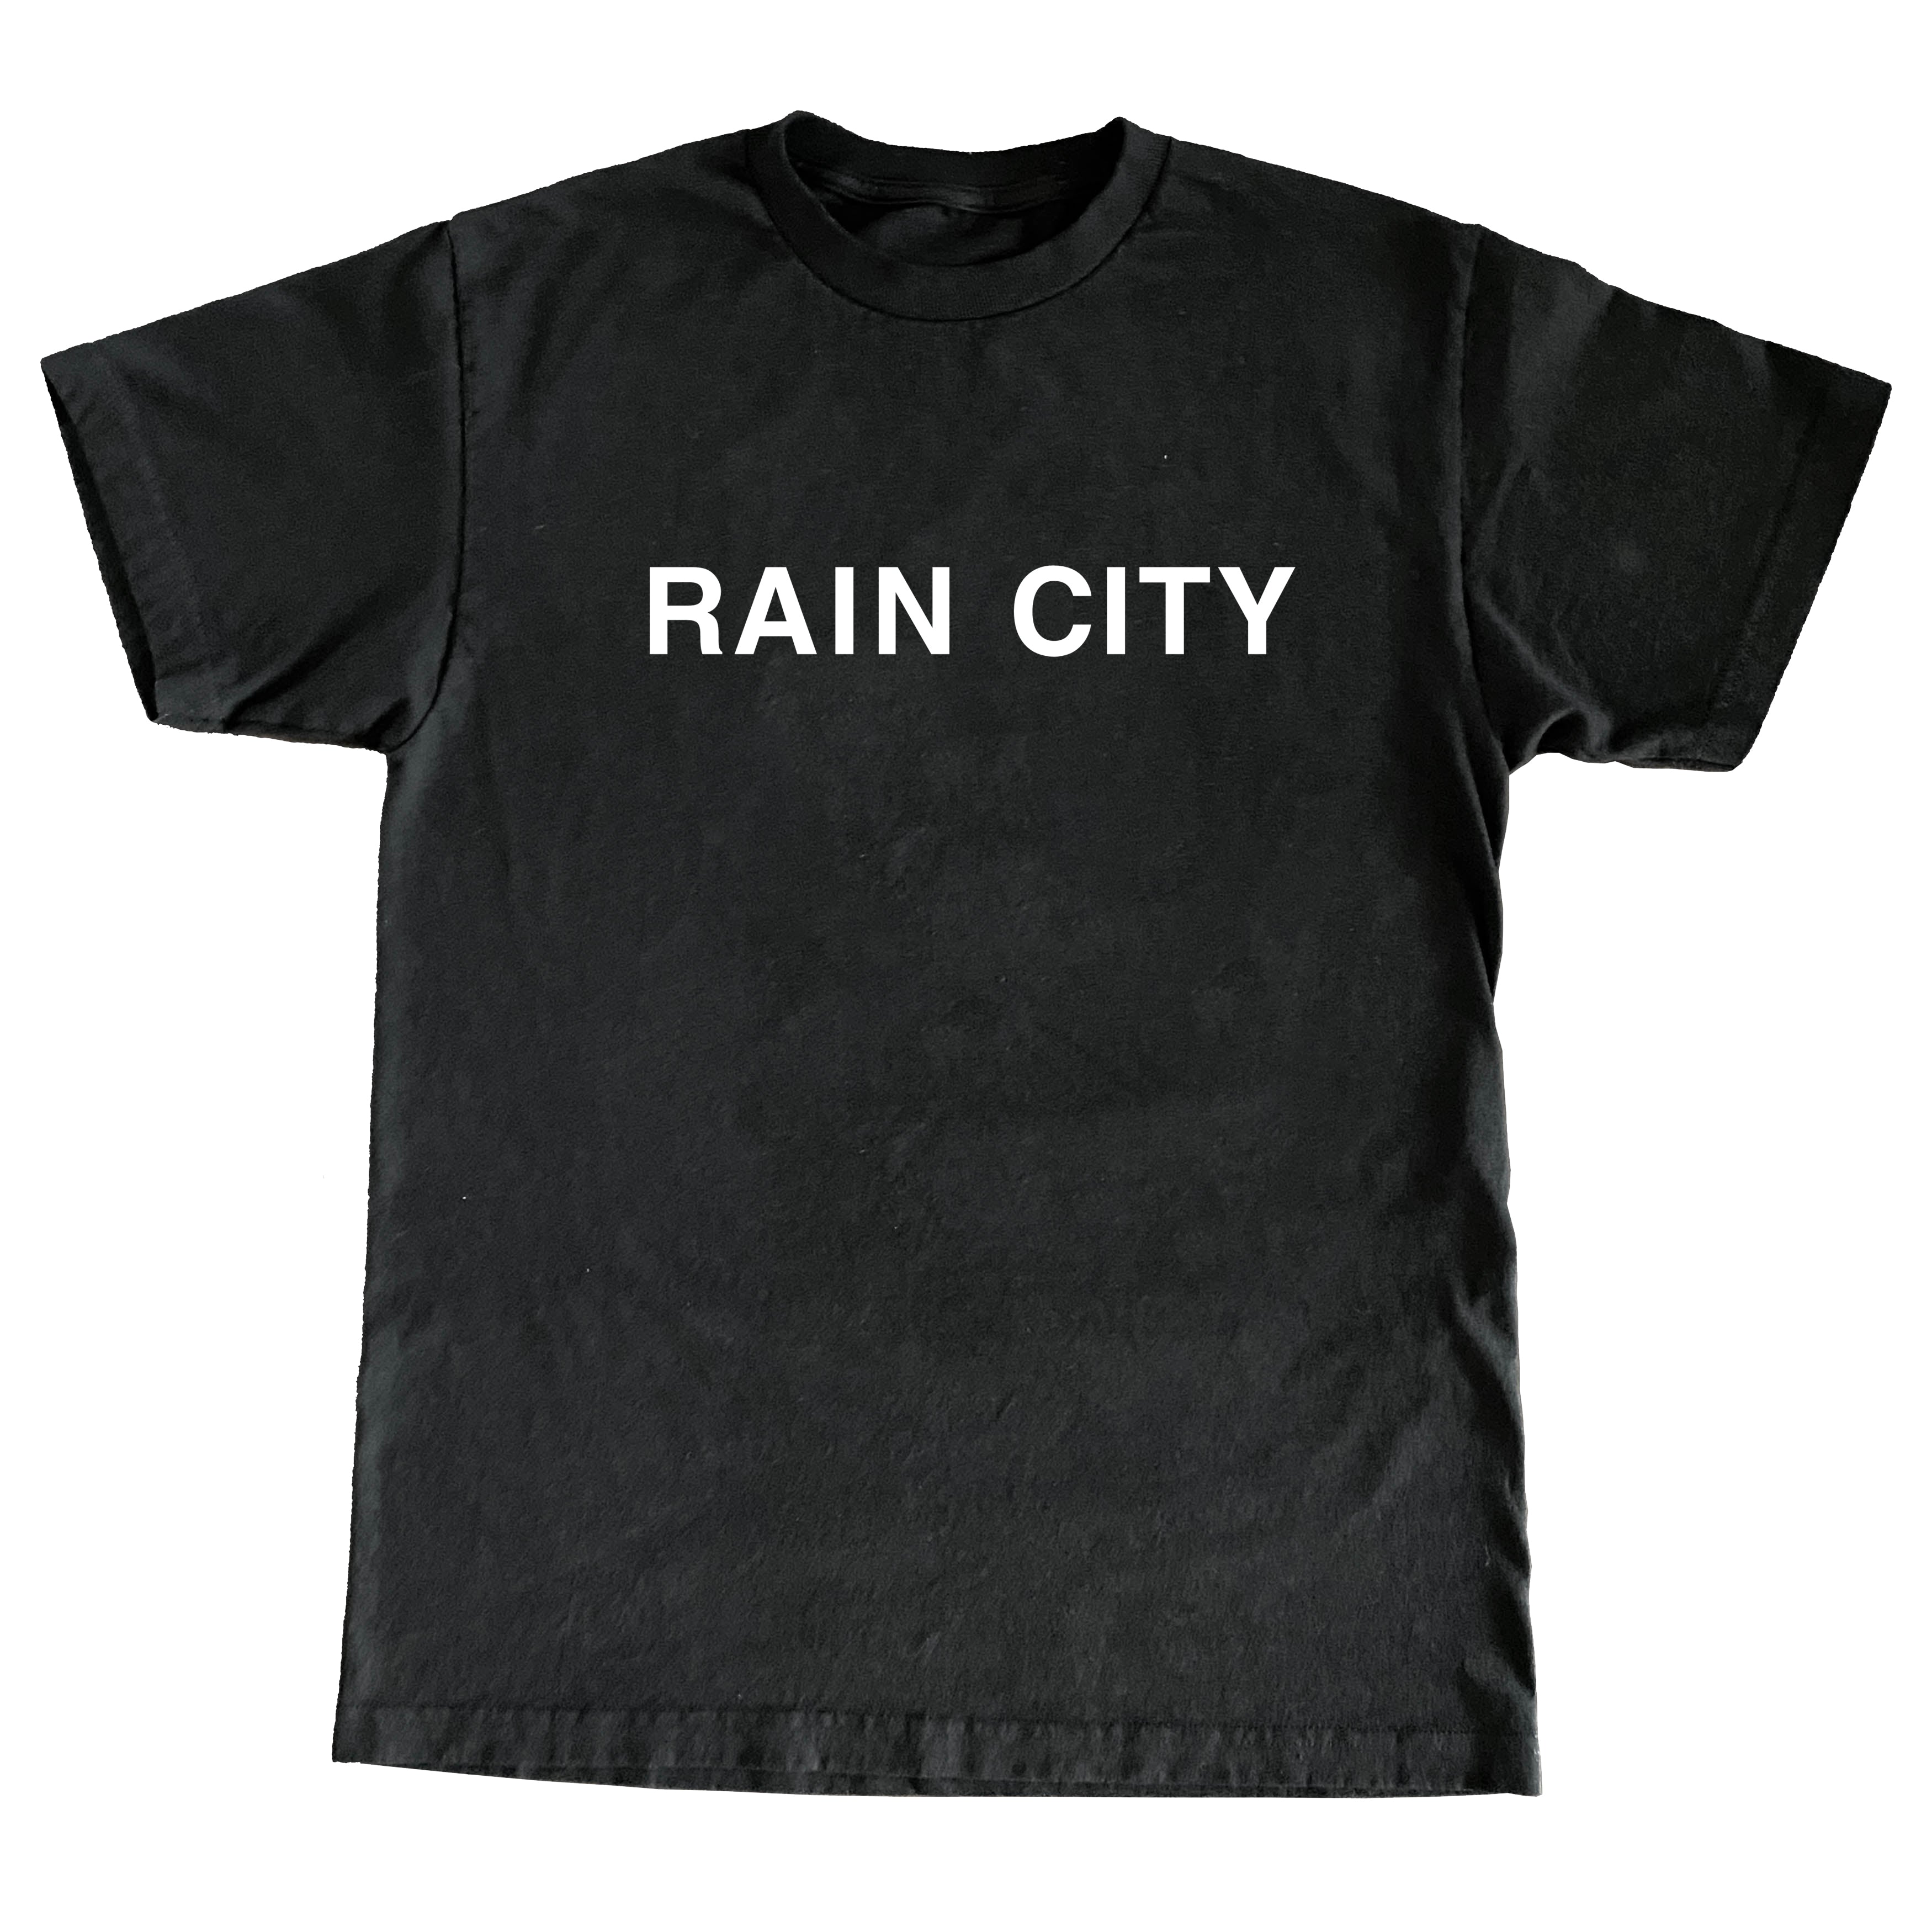 Rain City - Black Tee